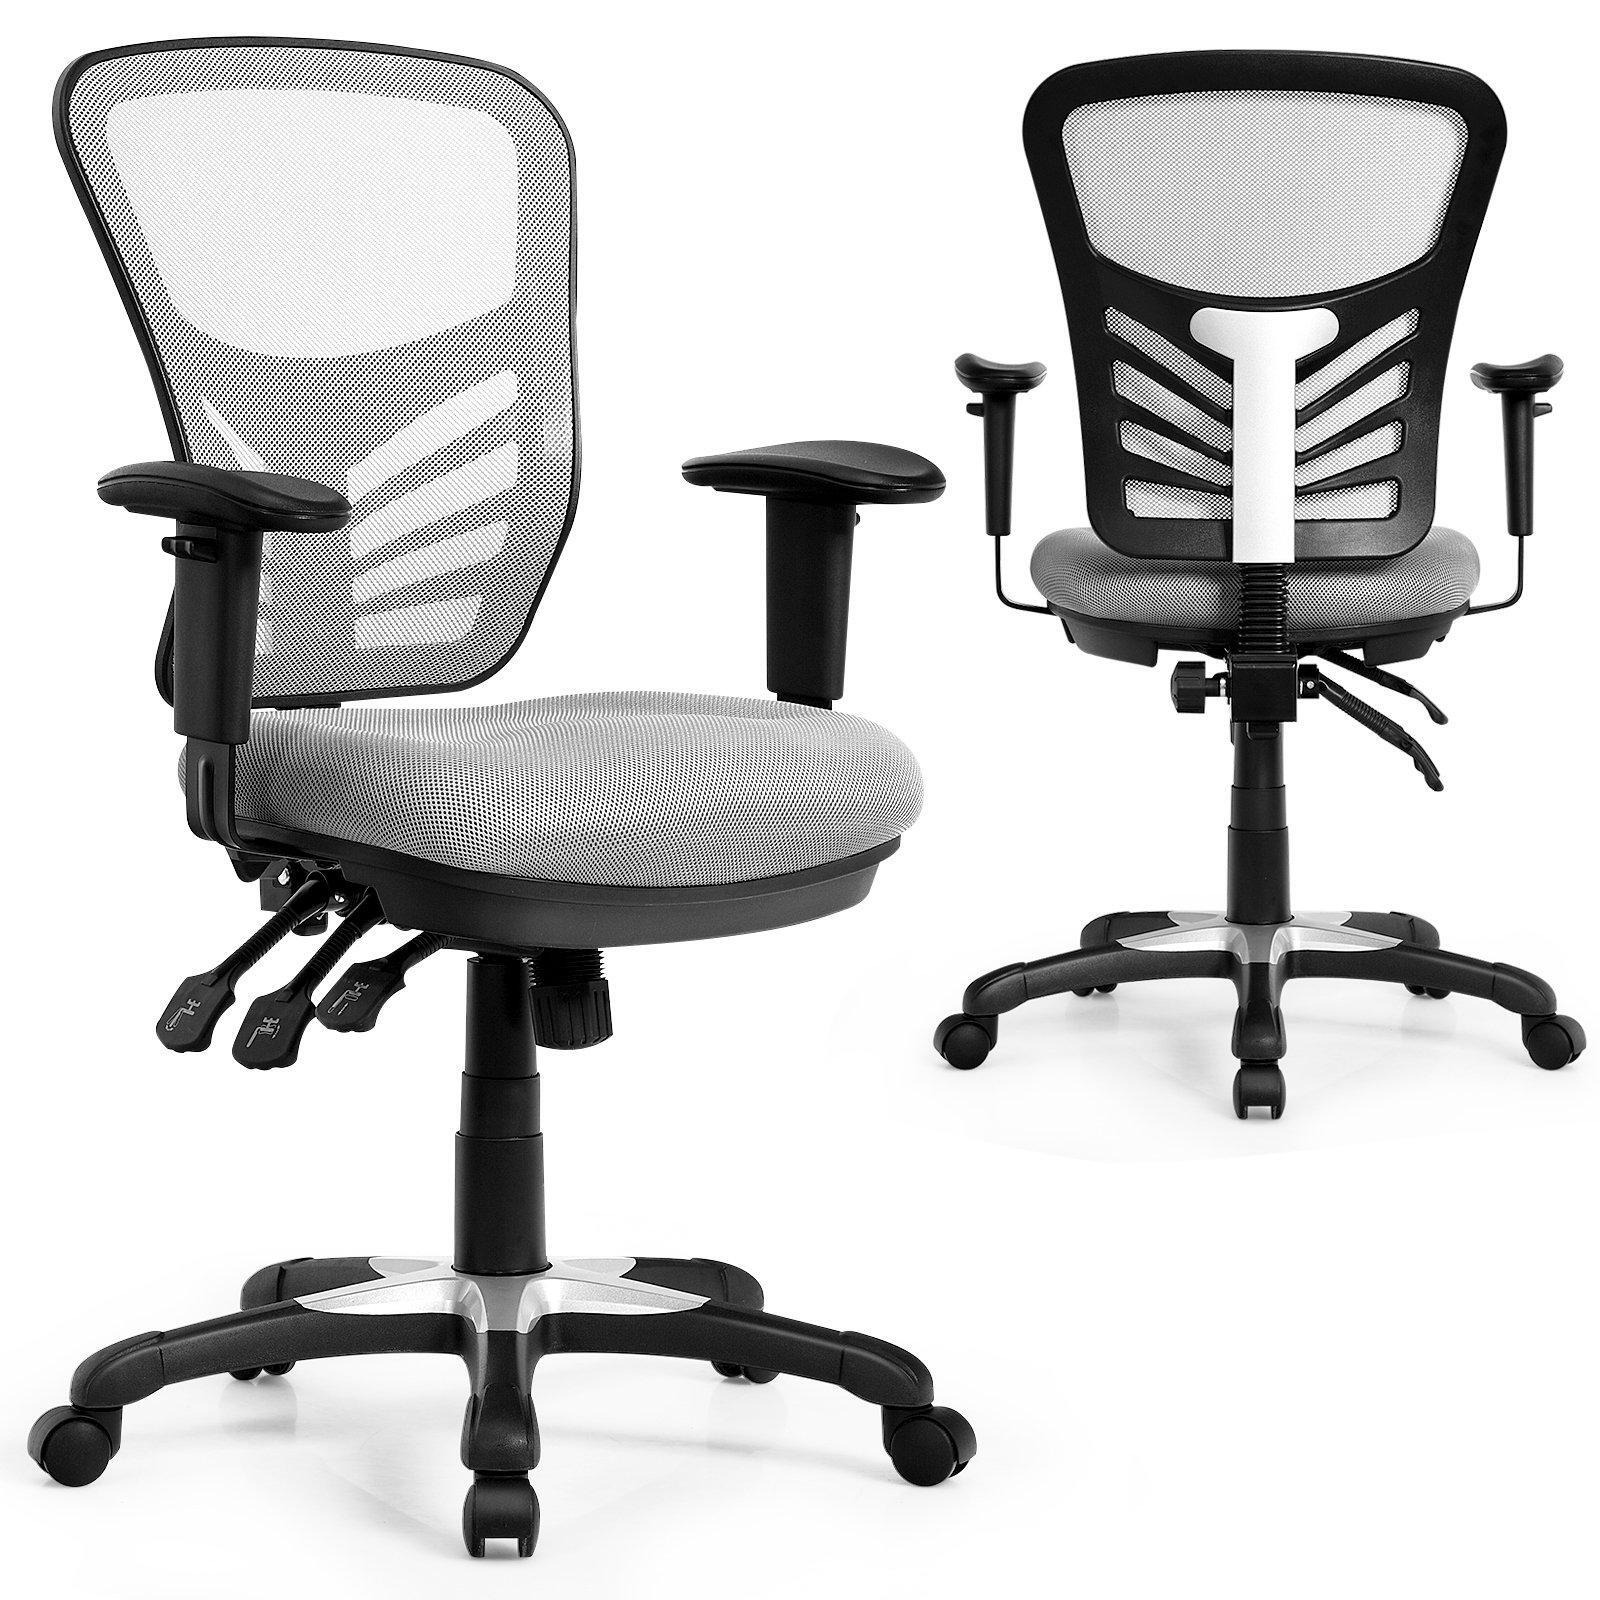 Reclining Mesh Office Chair Ergonomic Executive Adjustable w/ Lumbar Support - image 1